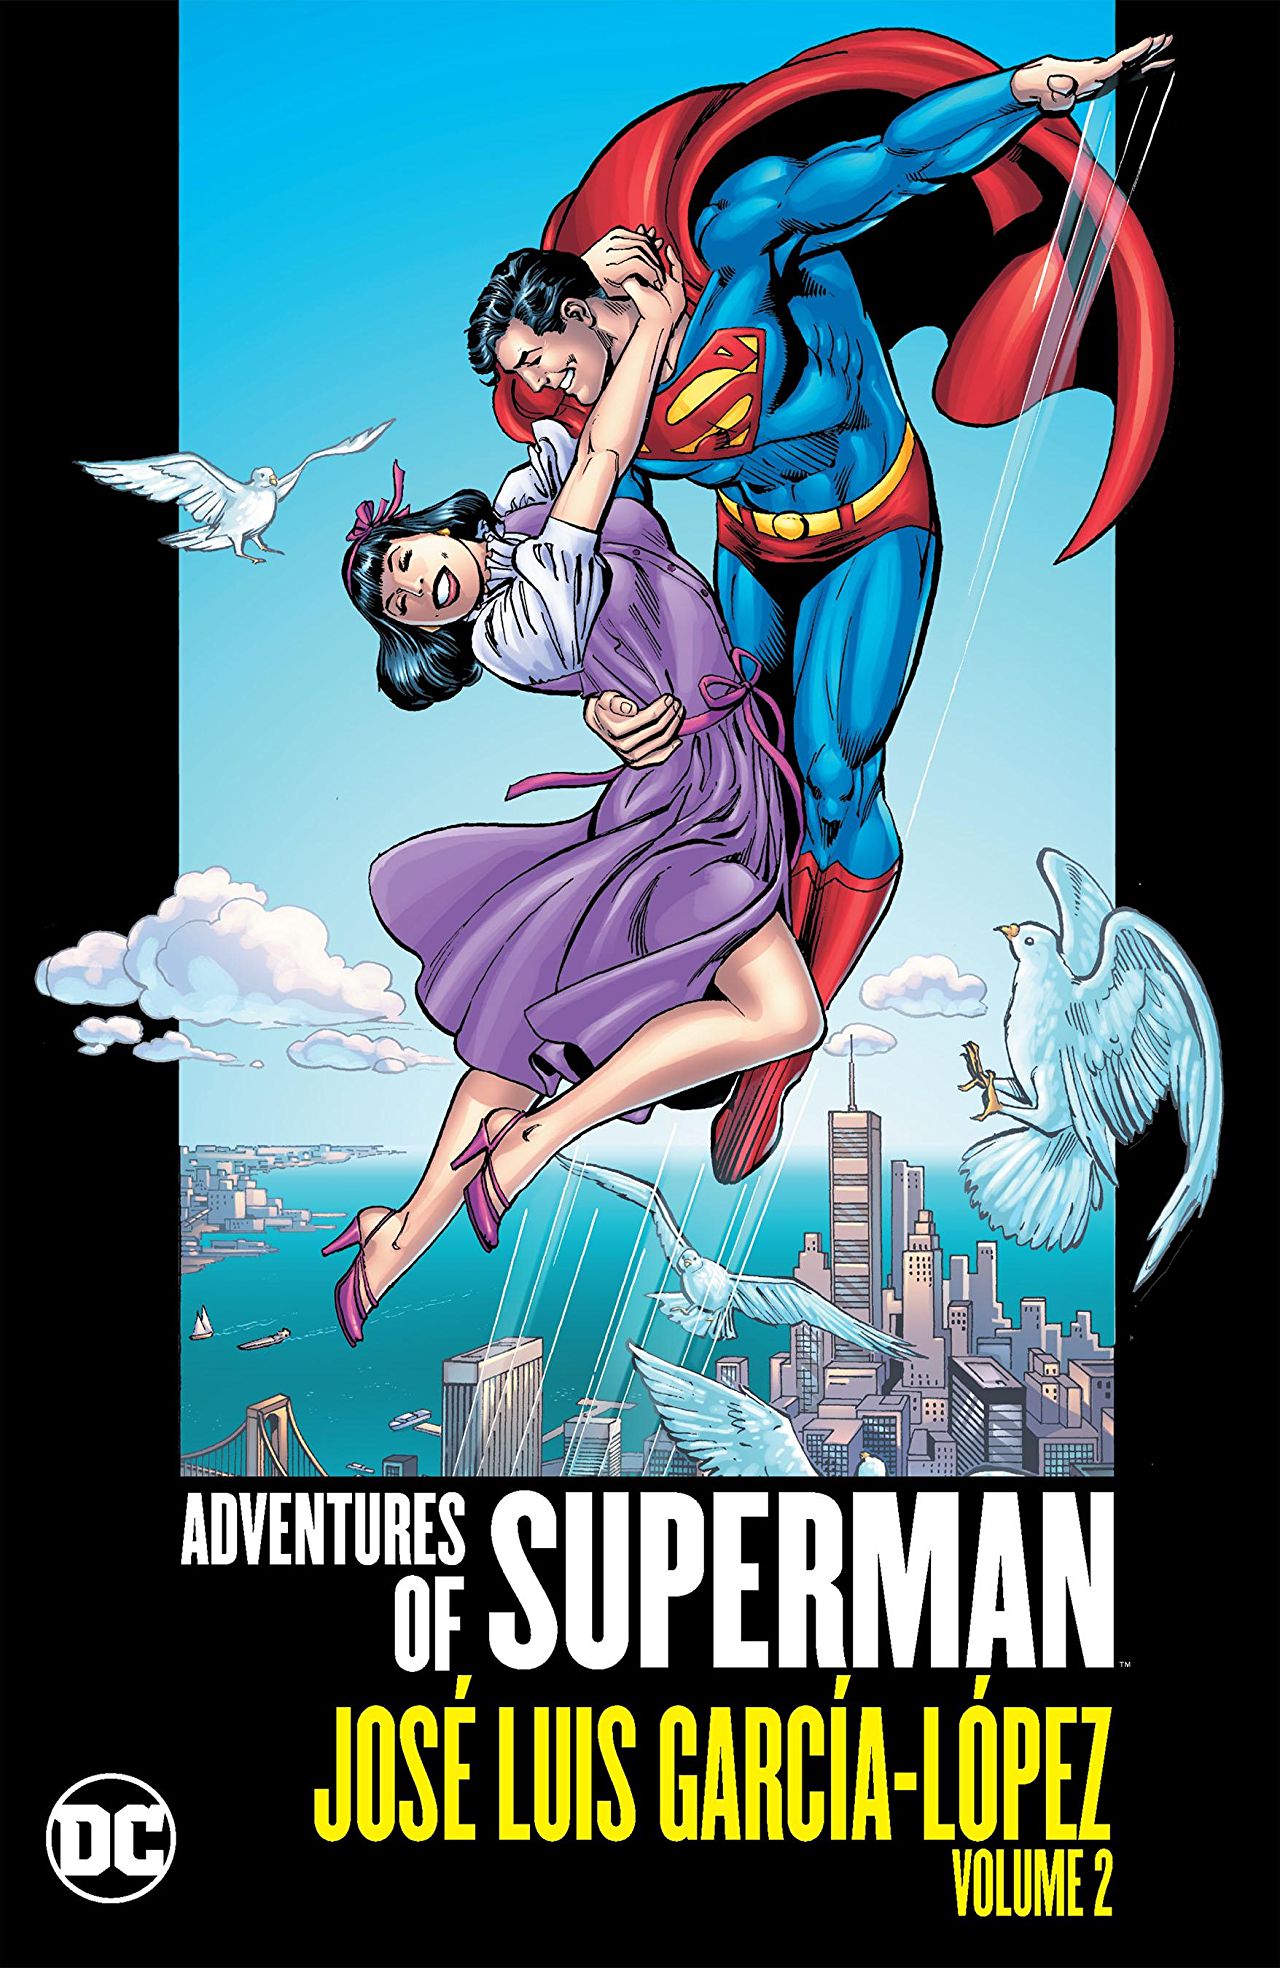 Adventures of Superman Jose Luis Garcia Lopez Hardcover Volume 2